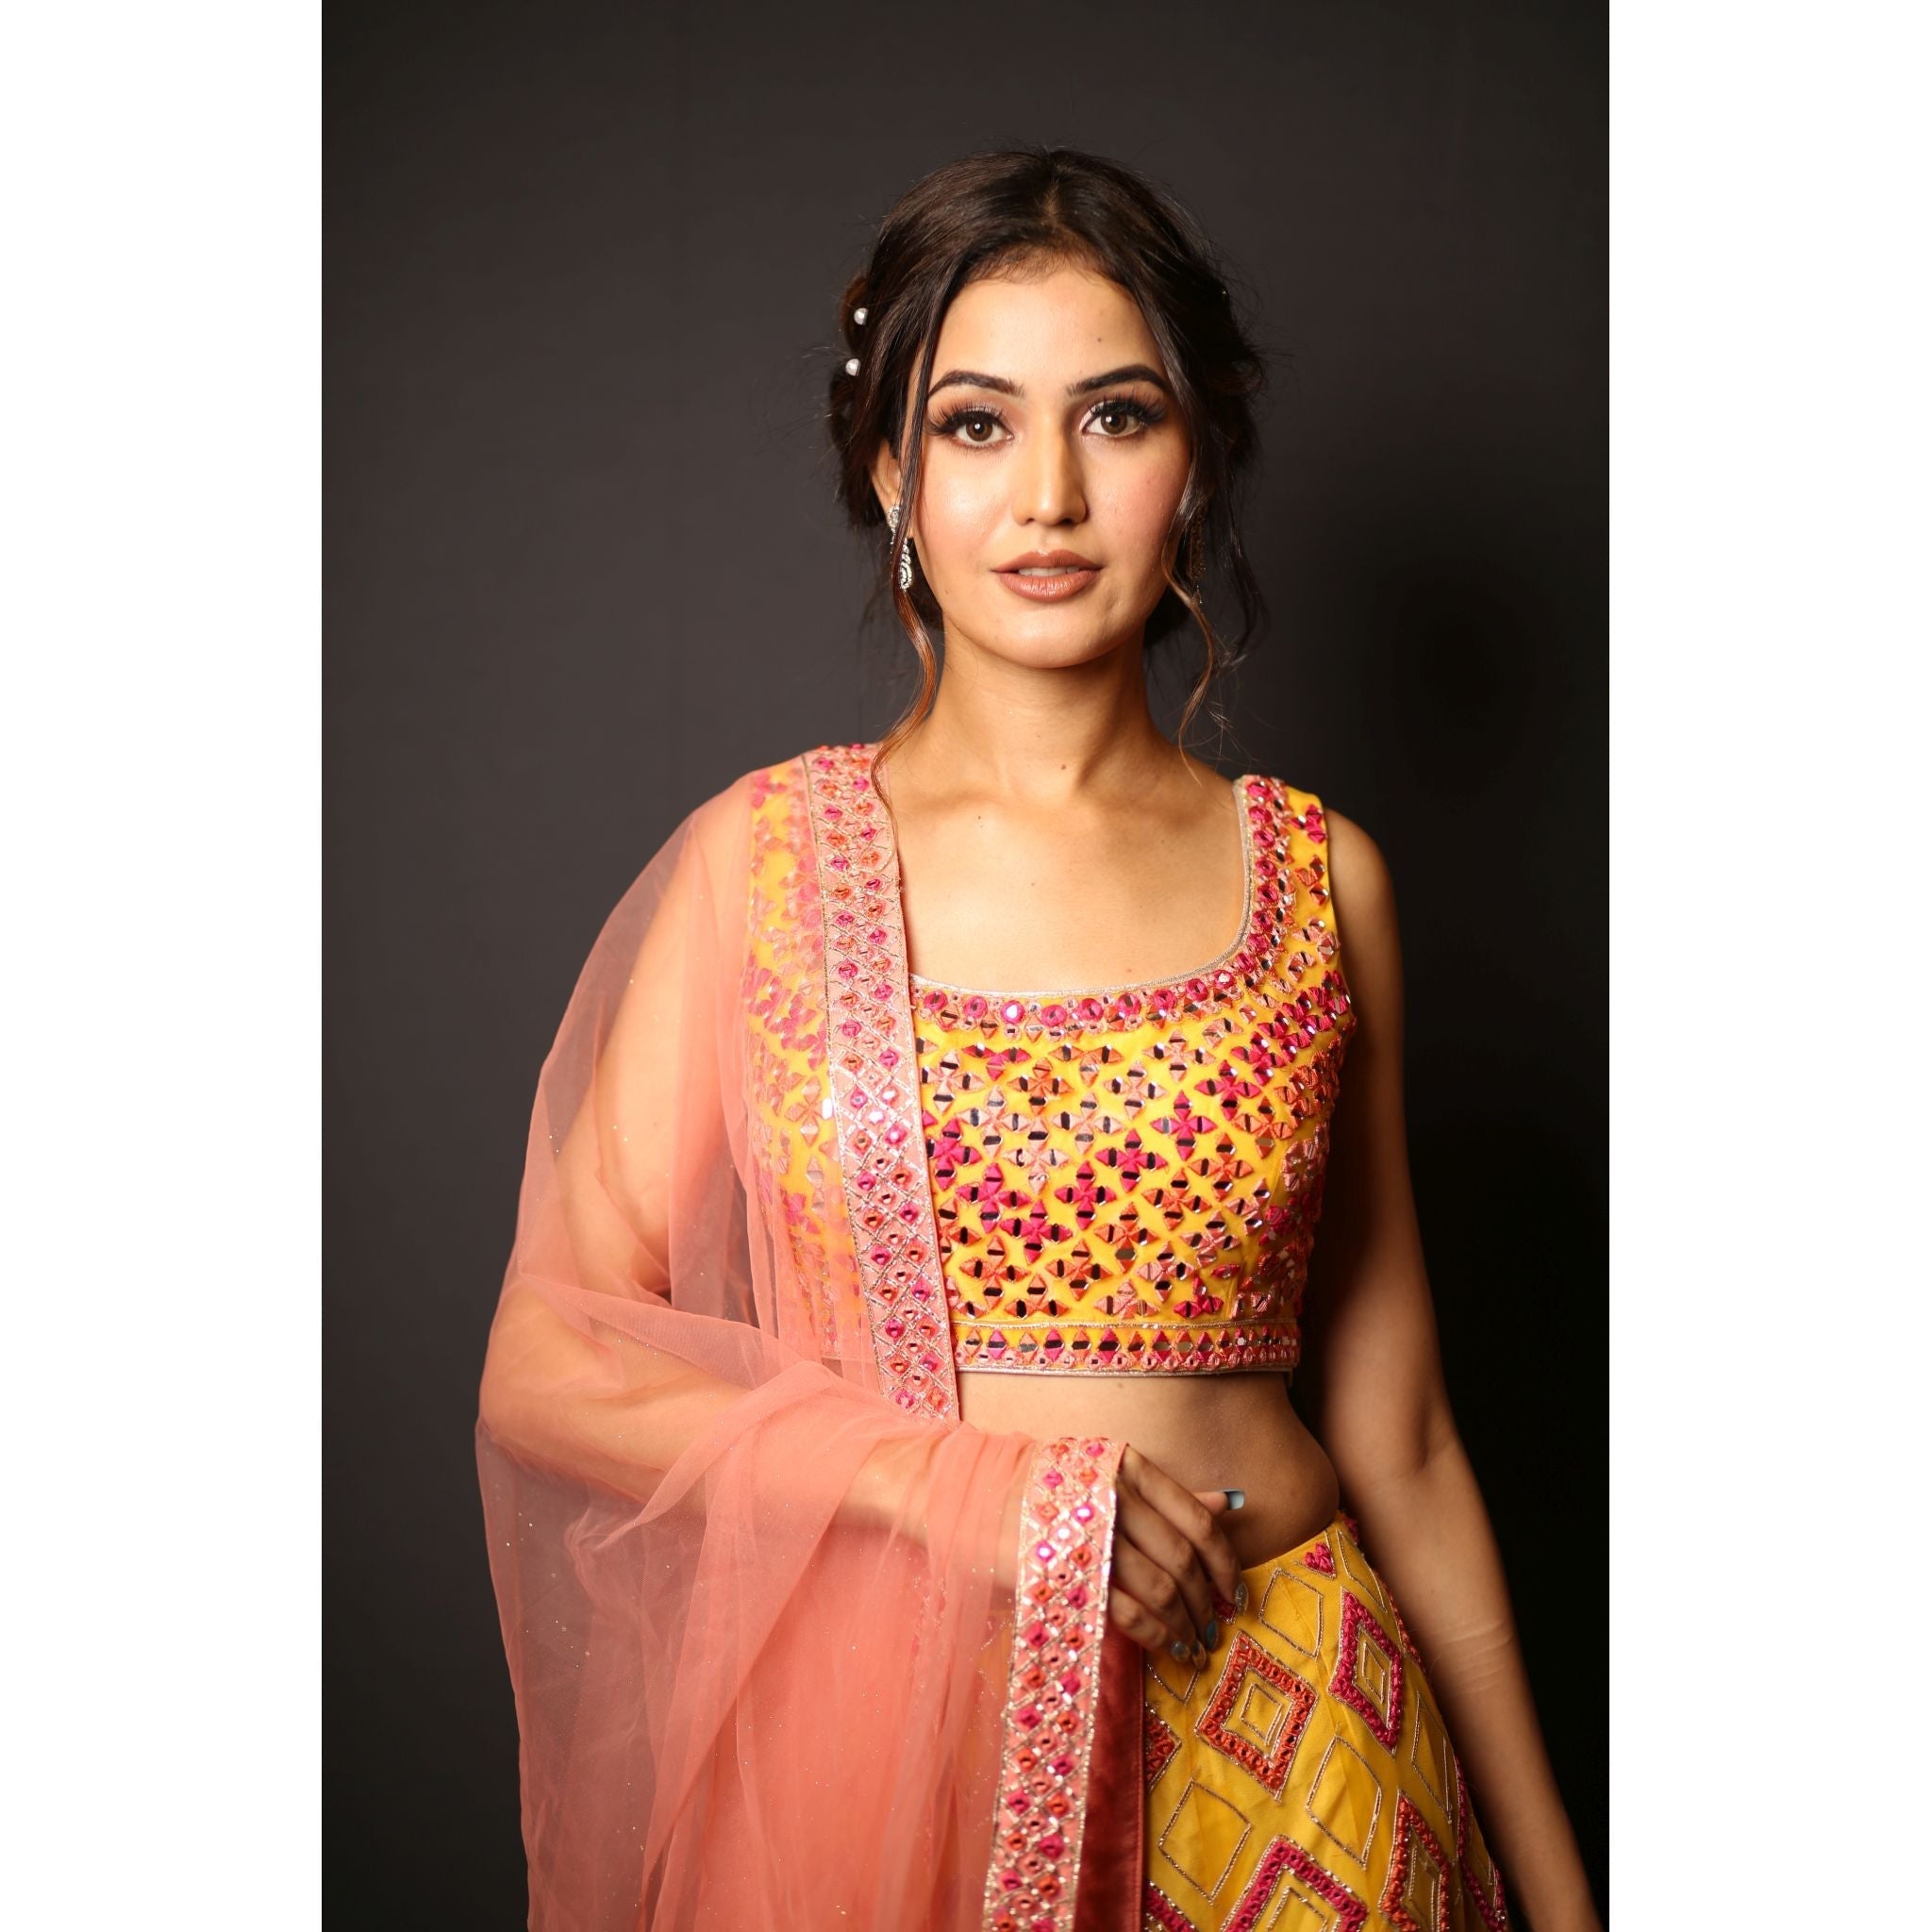 Yellow Multi-Colored Lehenga Set - Indian Designer Bridal Wedding Outfit